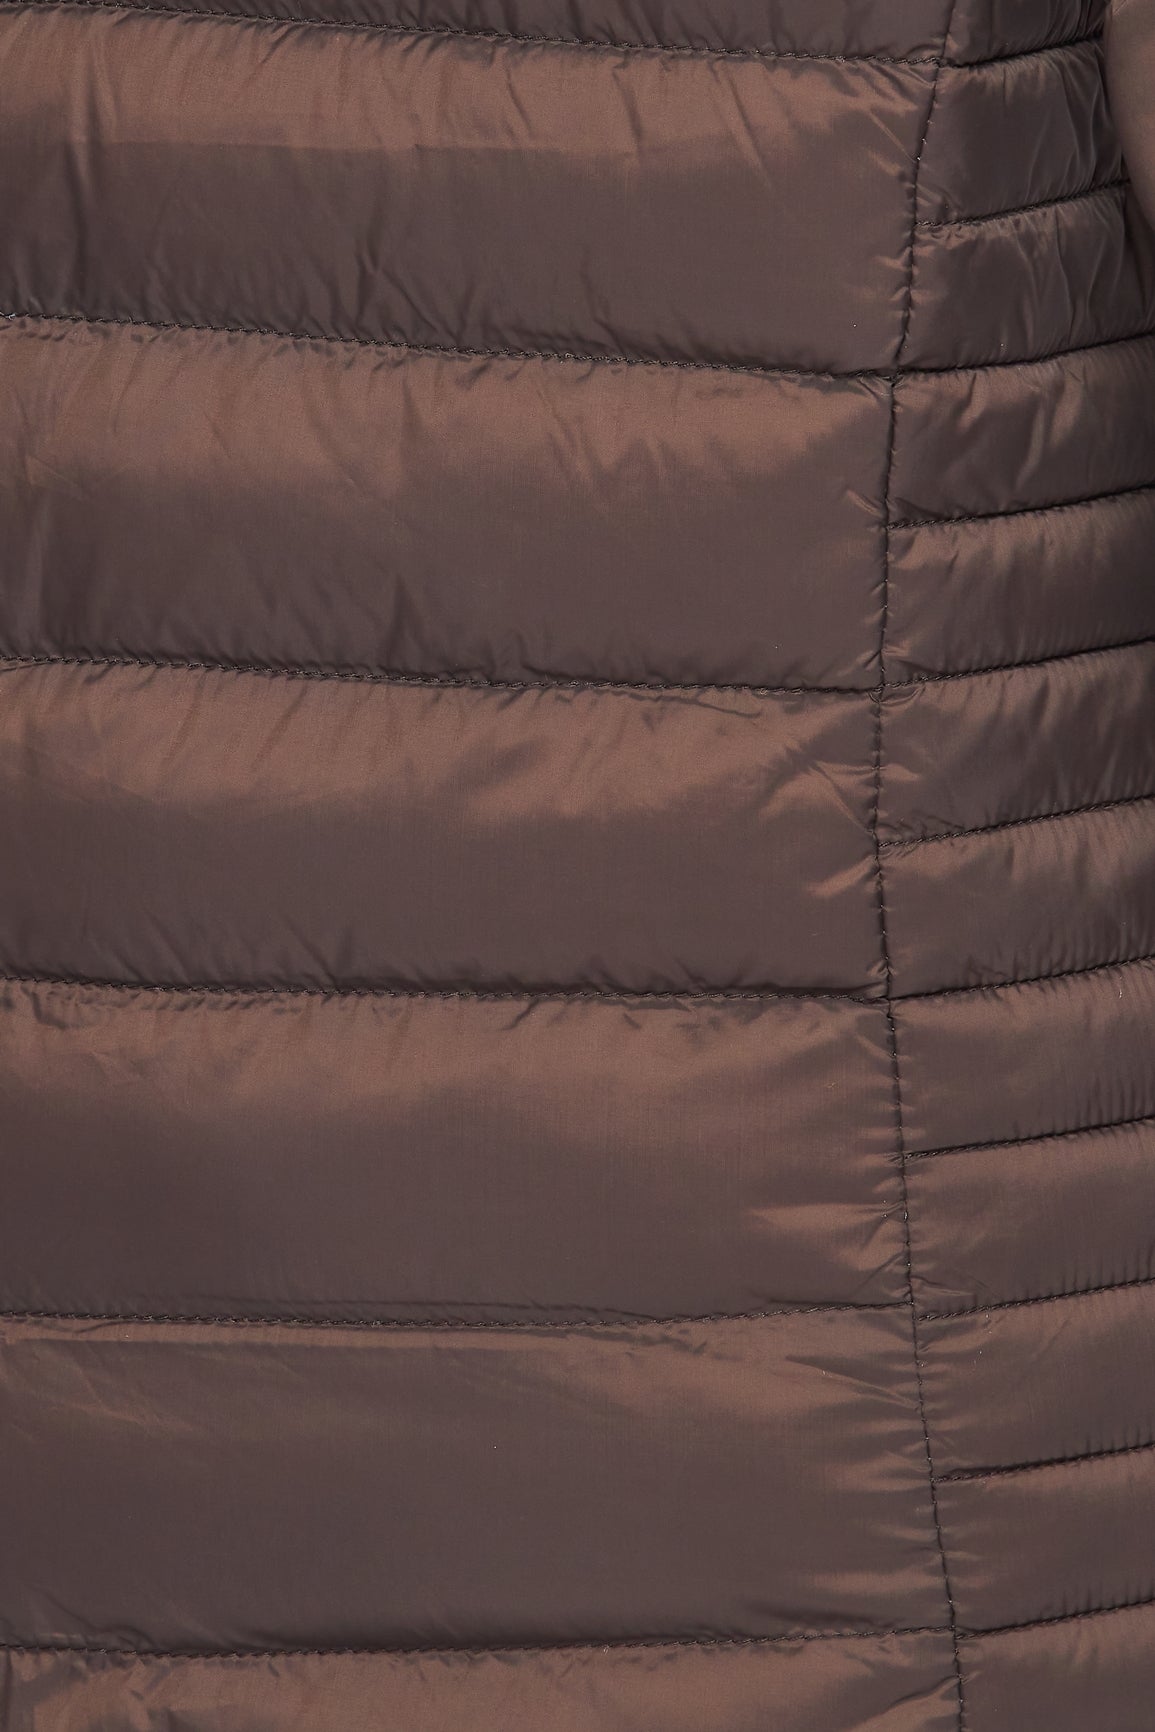 Women's Soft Coated Winter Puffer Jackets-LJ640 - BROWN